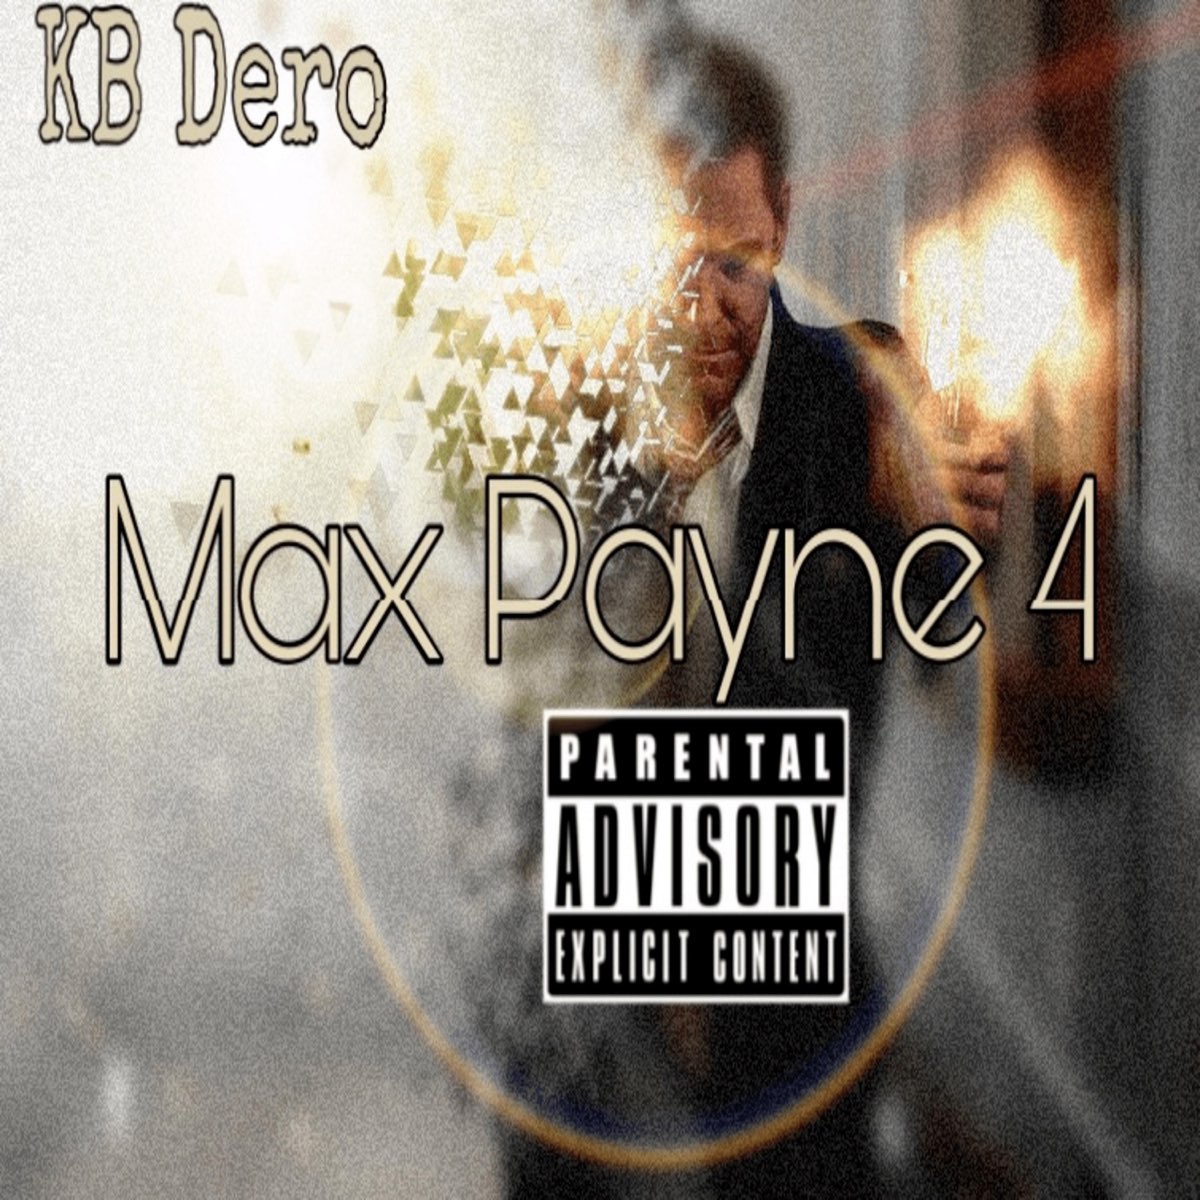 Max Payne 4 - Single - Album by KB Dero - Apple Music